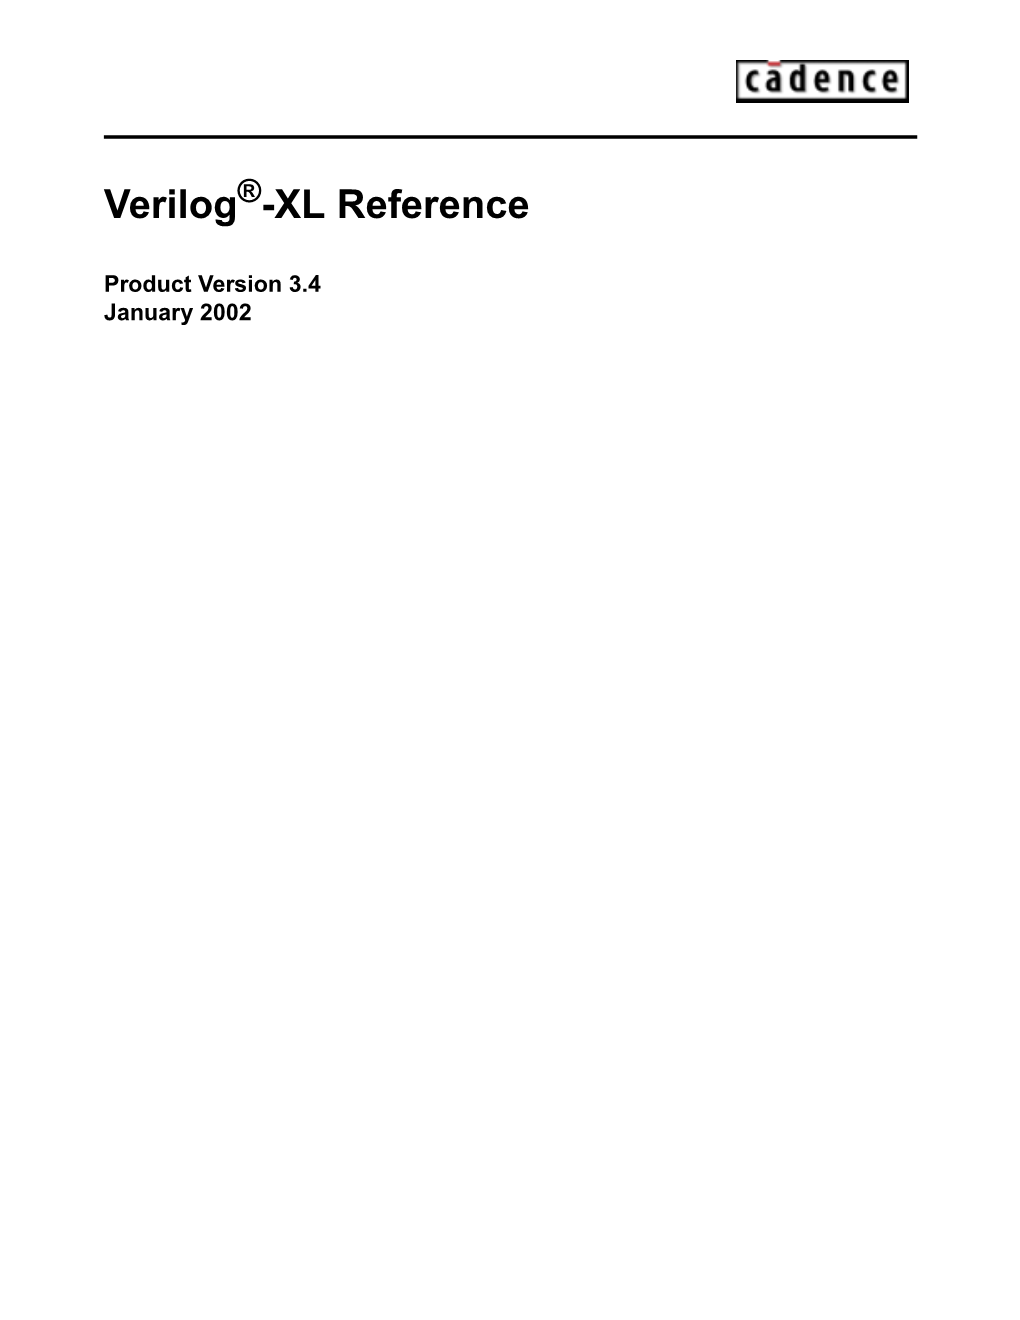 Verilog -XL Reference